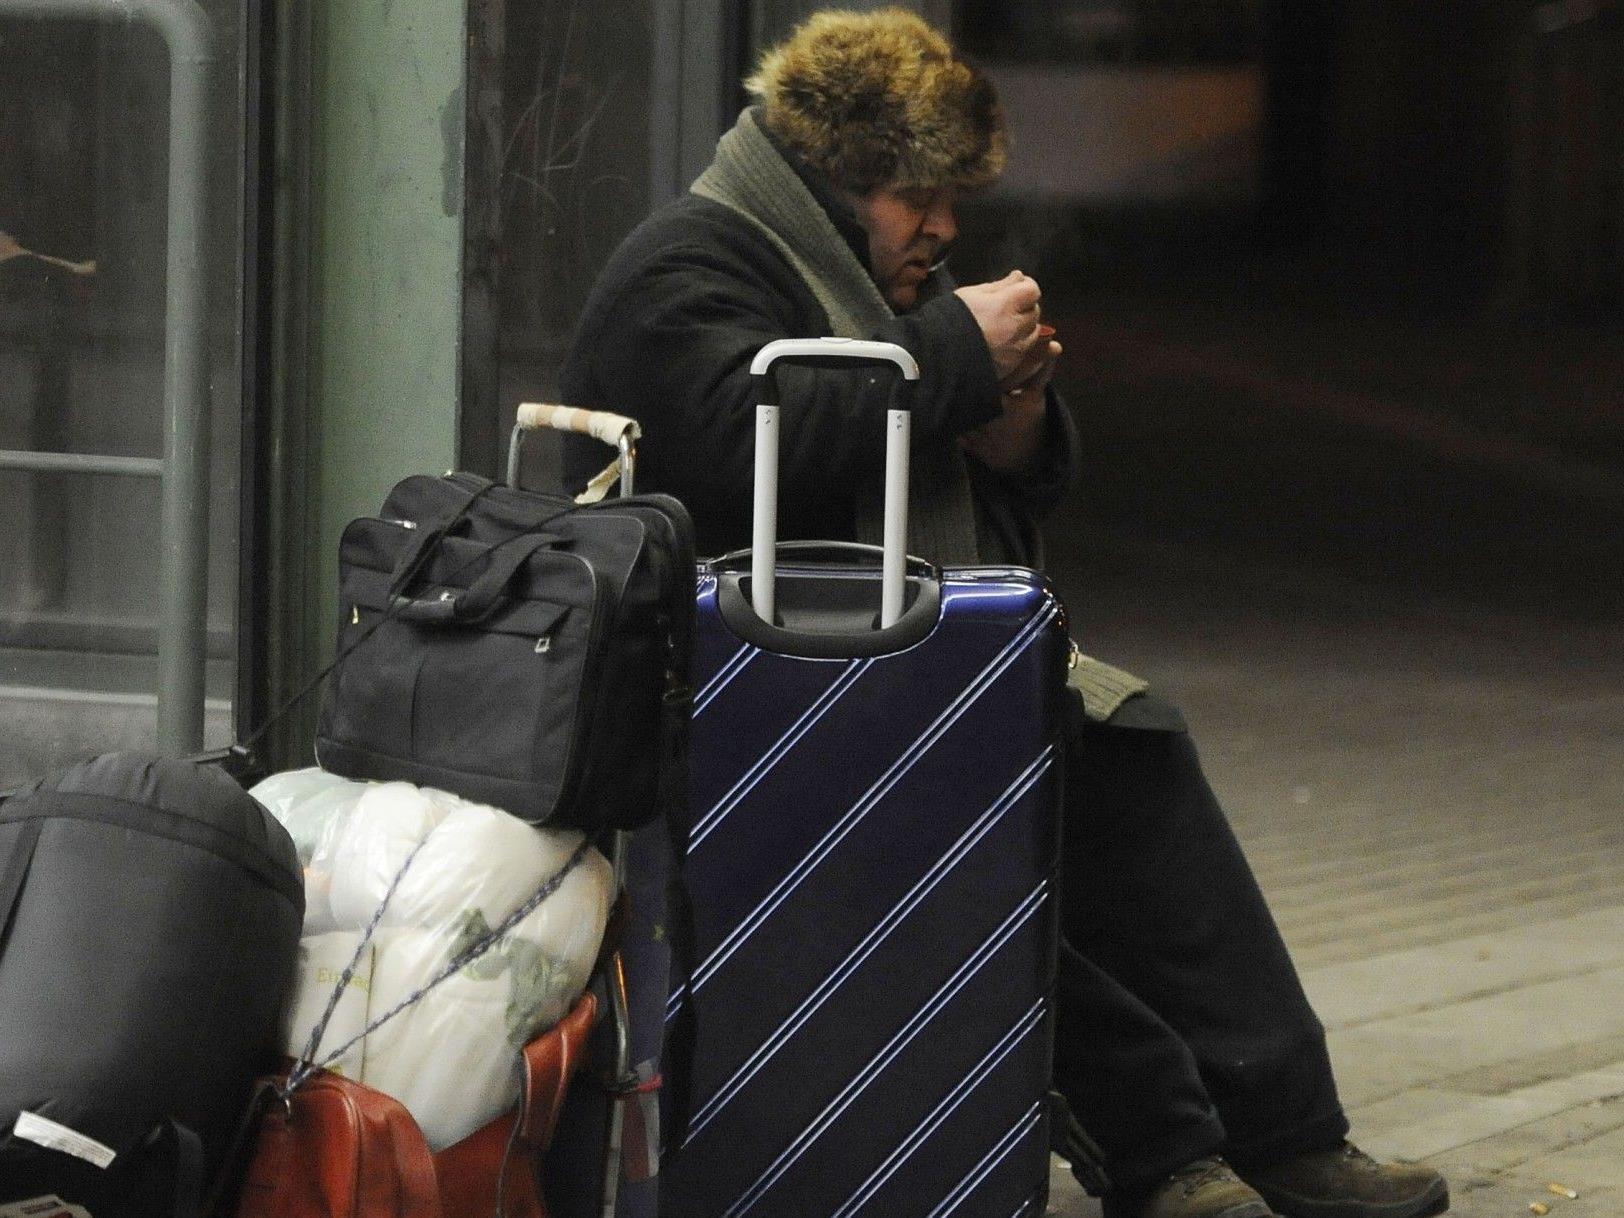 Kältetelefon der Caritas Wien hilft obdachlosen Menschen